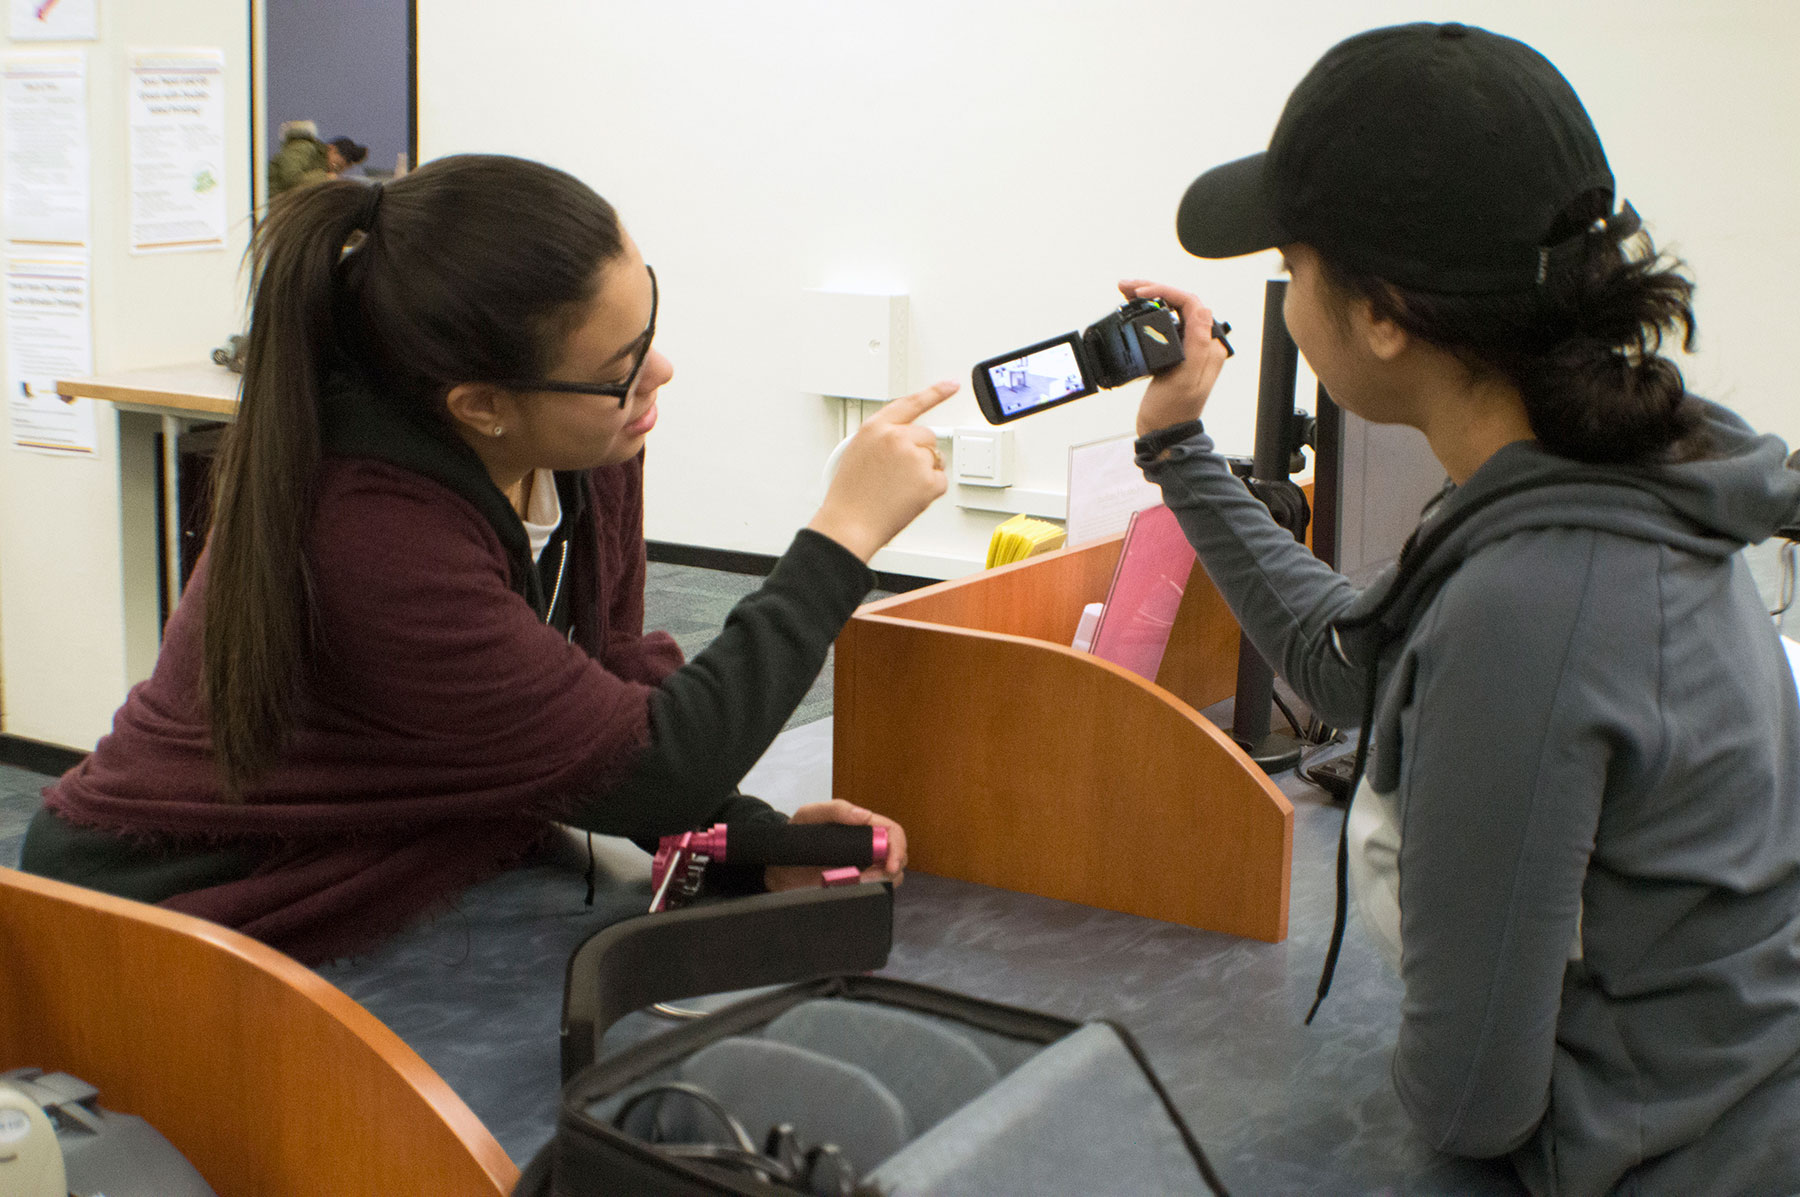 Student borrowing video camera